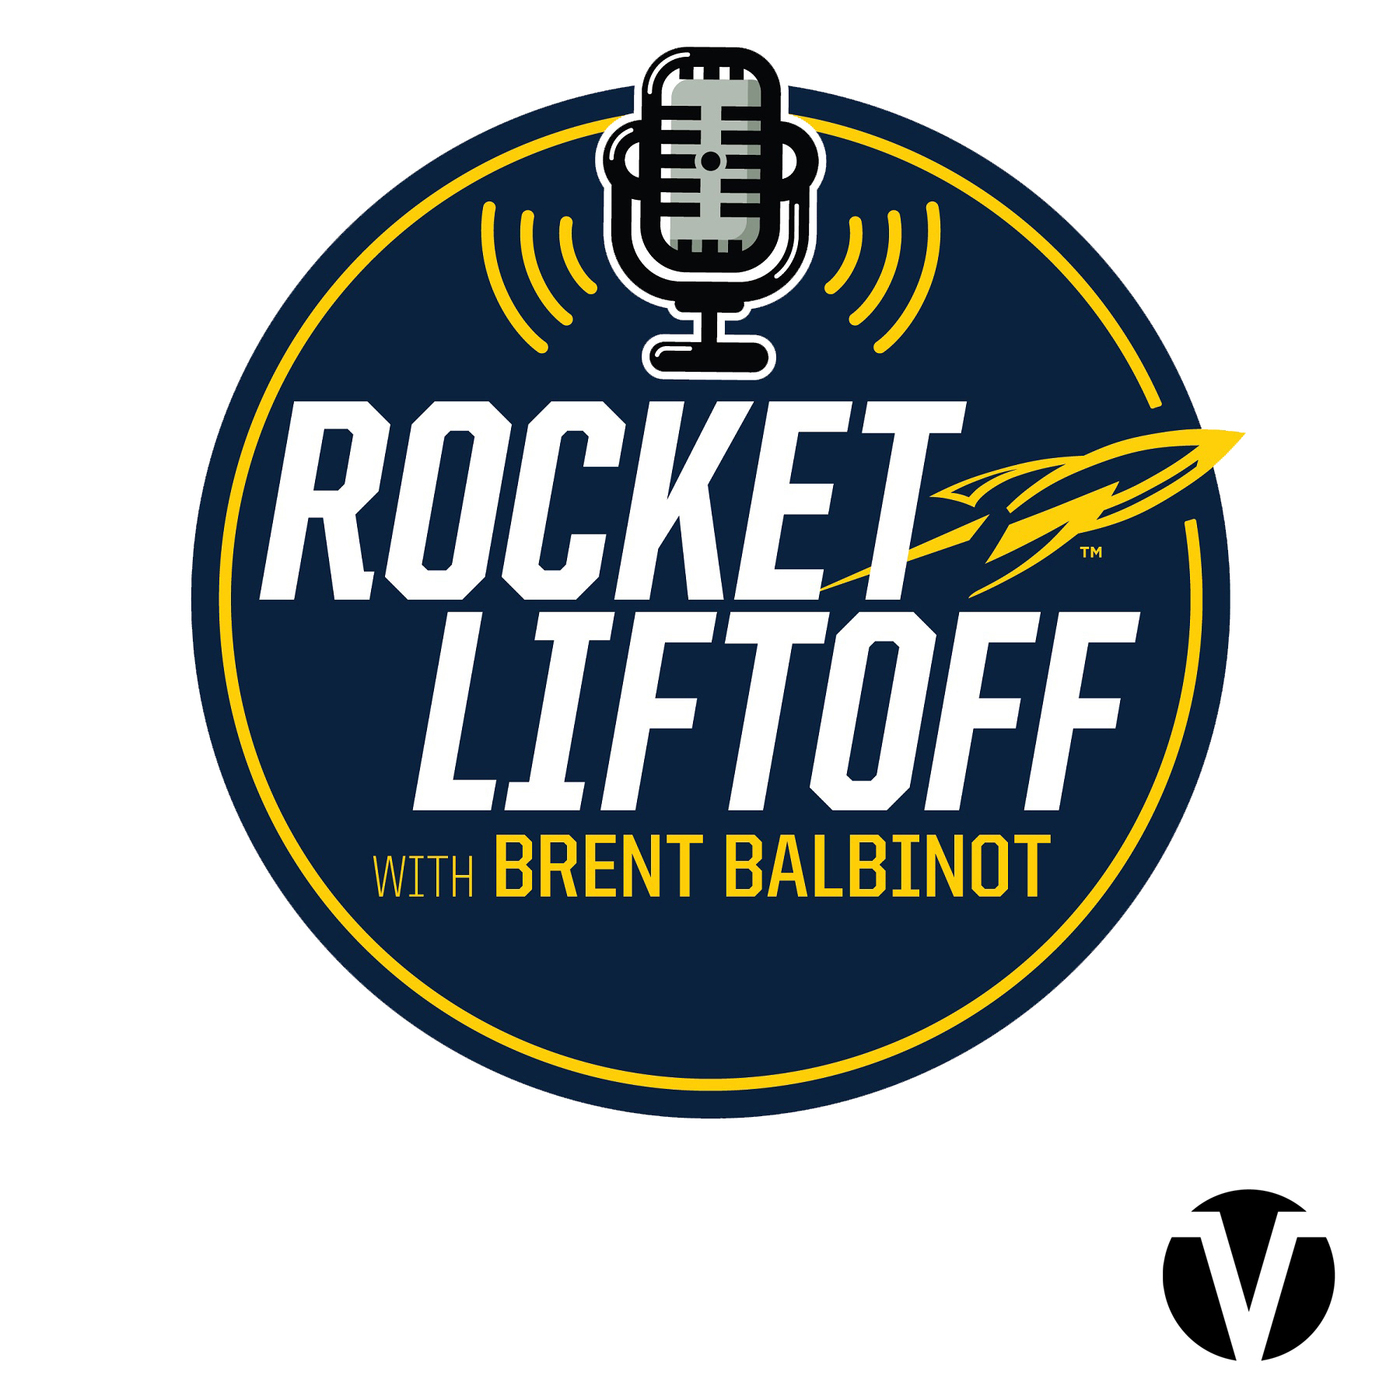 The Rocket Liftoff Podcast